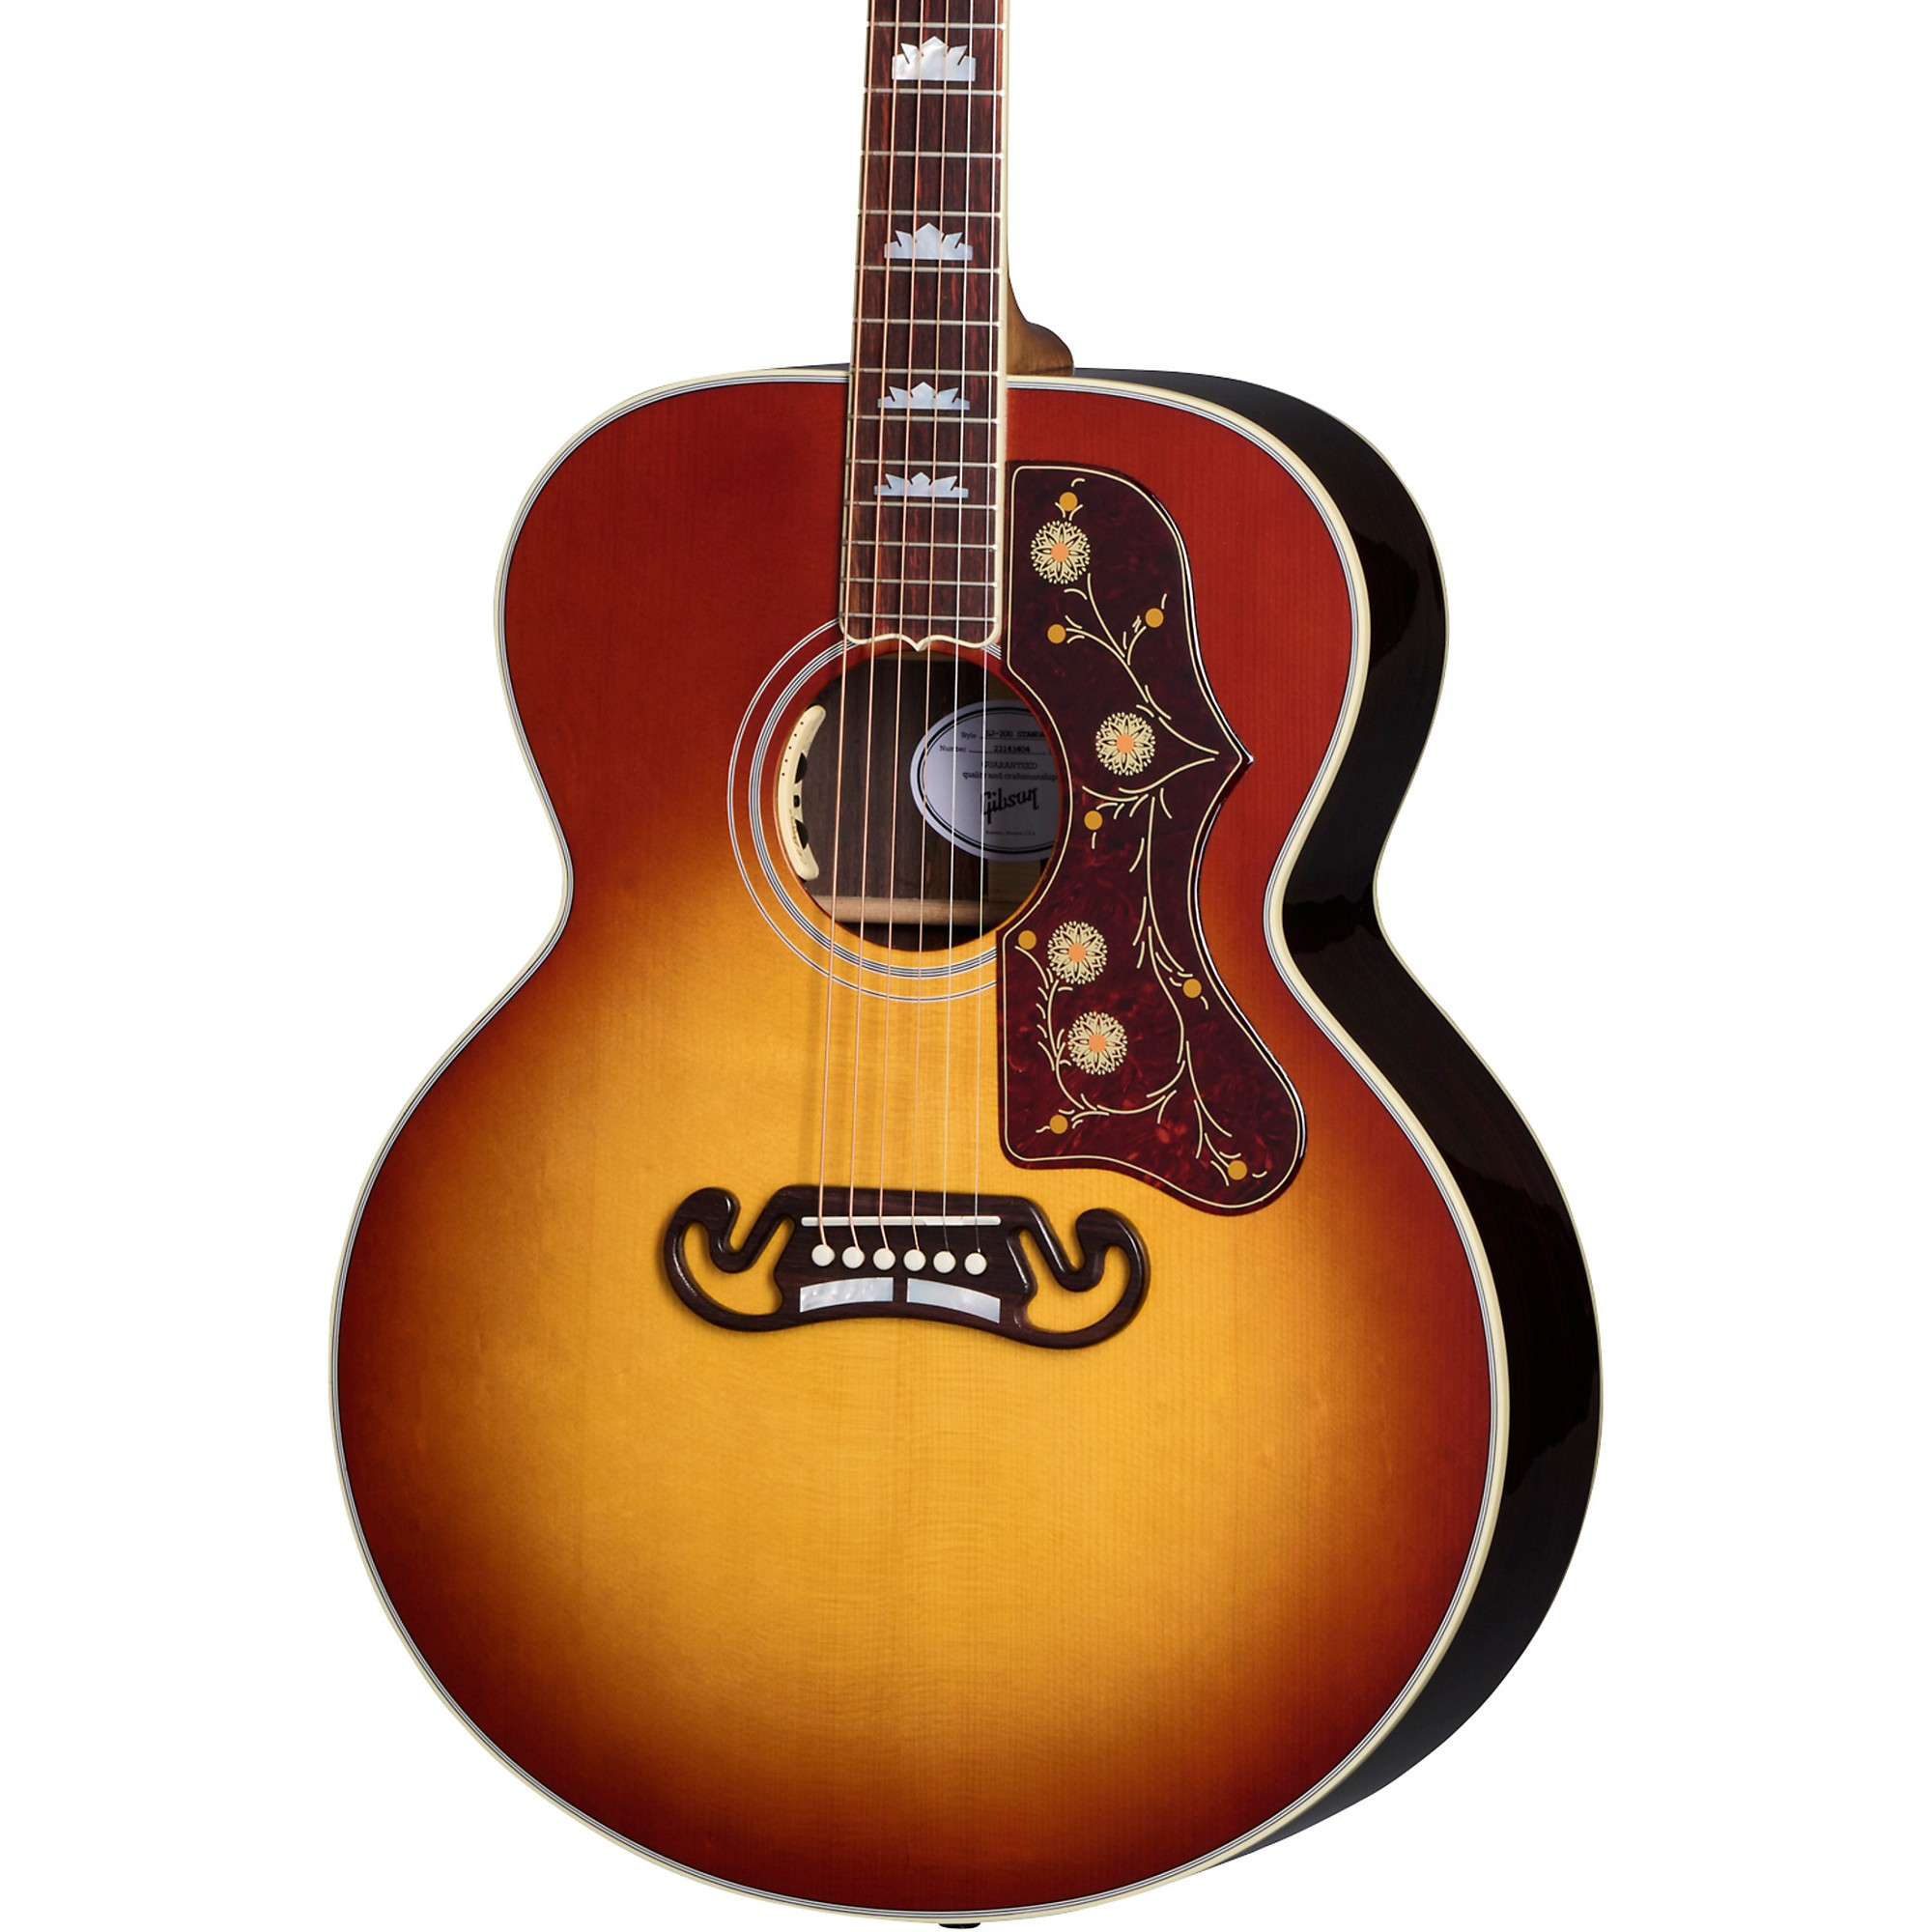 Акустически-электрическая гитара Gibson SJ-200 Standard Rosewood Rosewood Burst акустическая гитара gibson sj 200 standard autumn burst